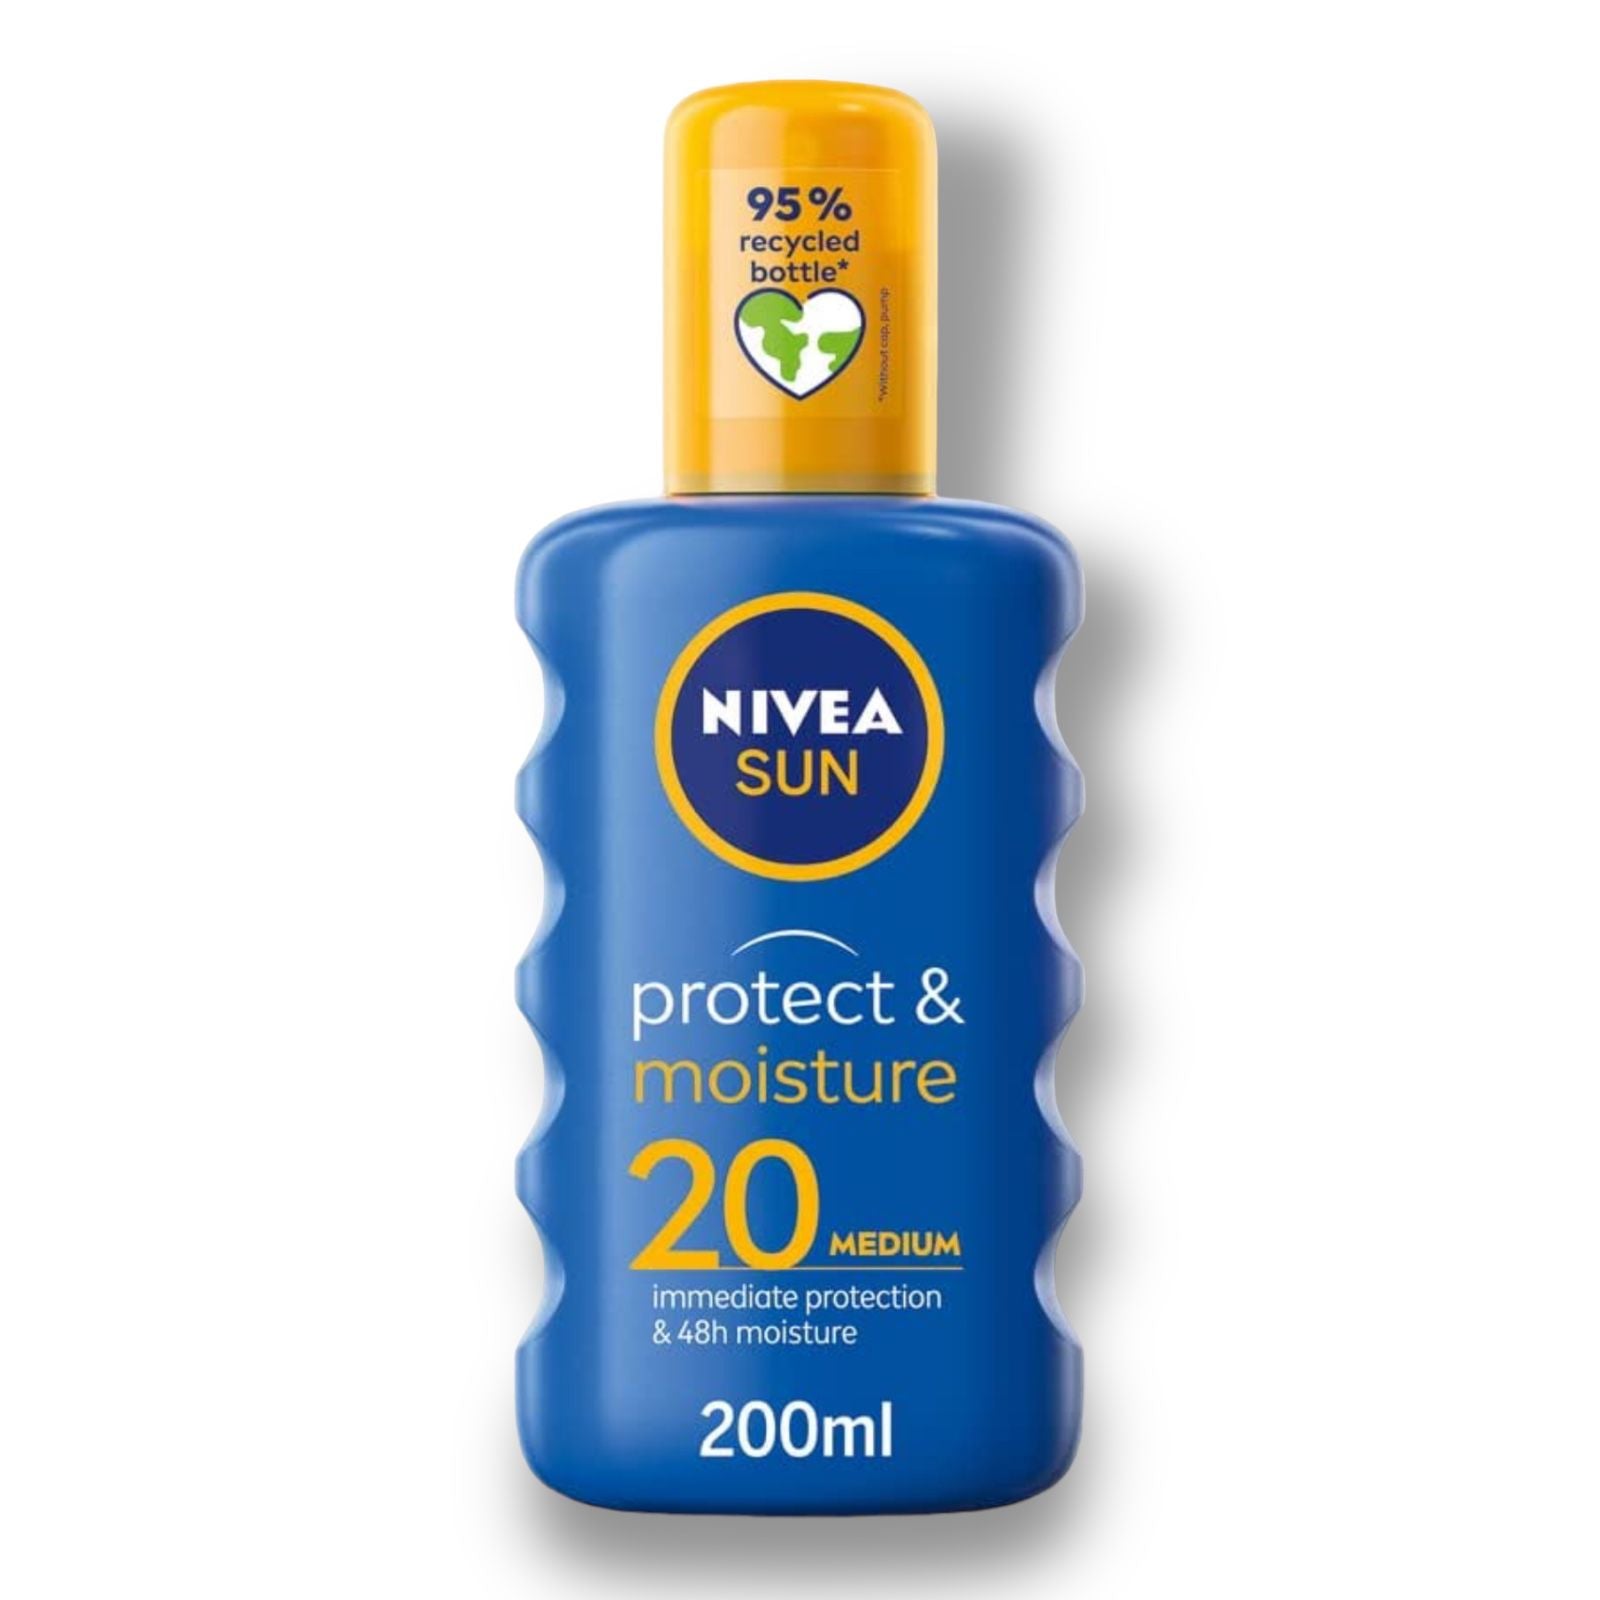 NIVEA SUN - PROTECT & MOISTURE SPF 20+ 200ml